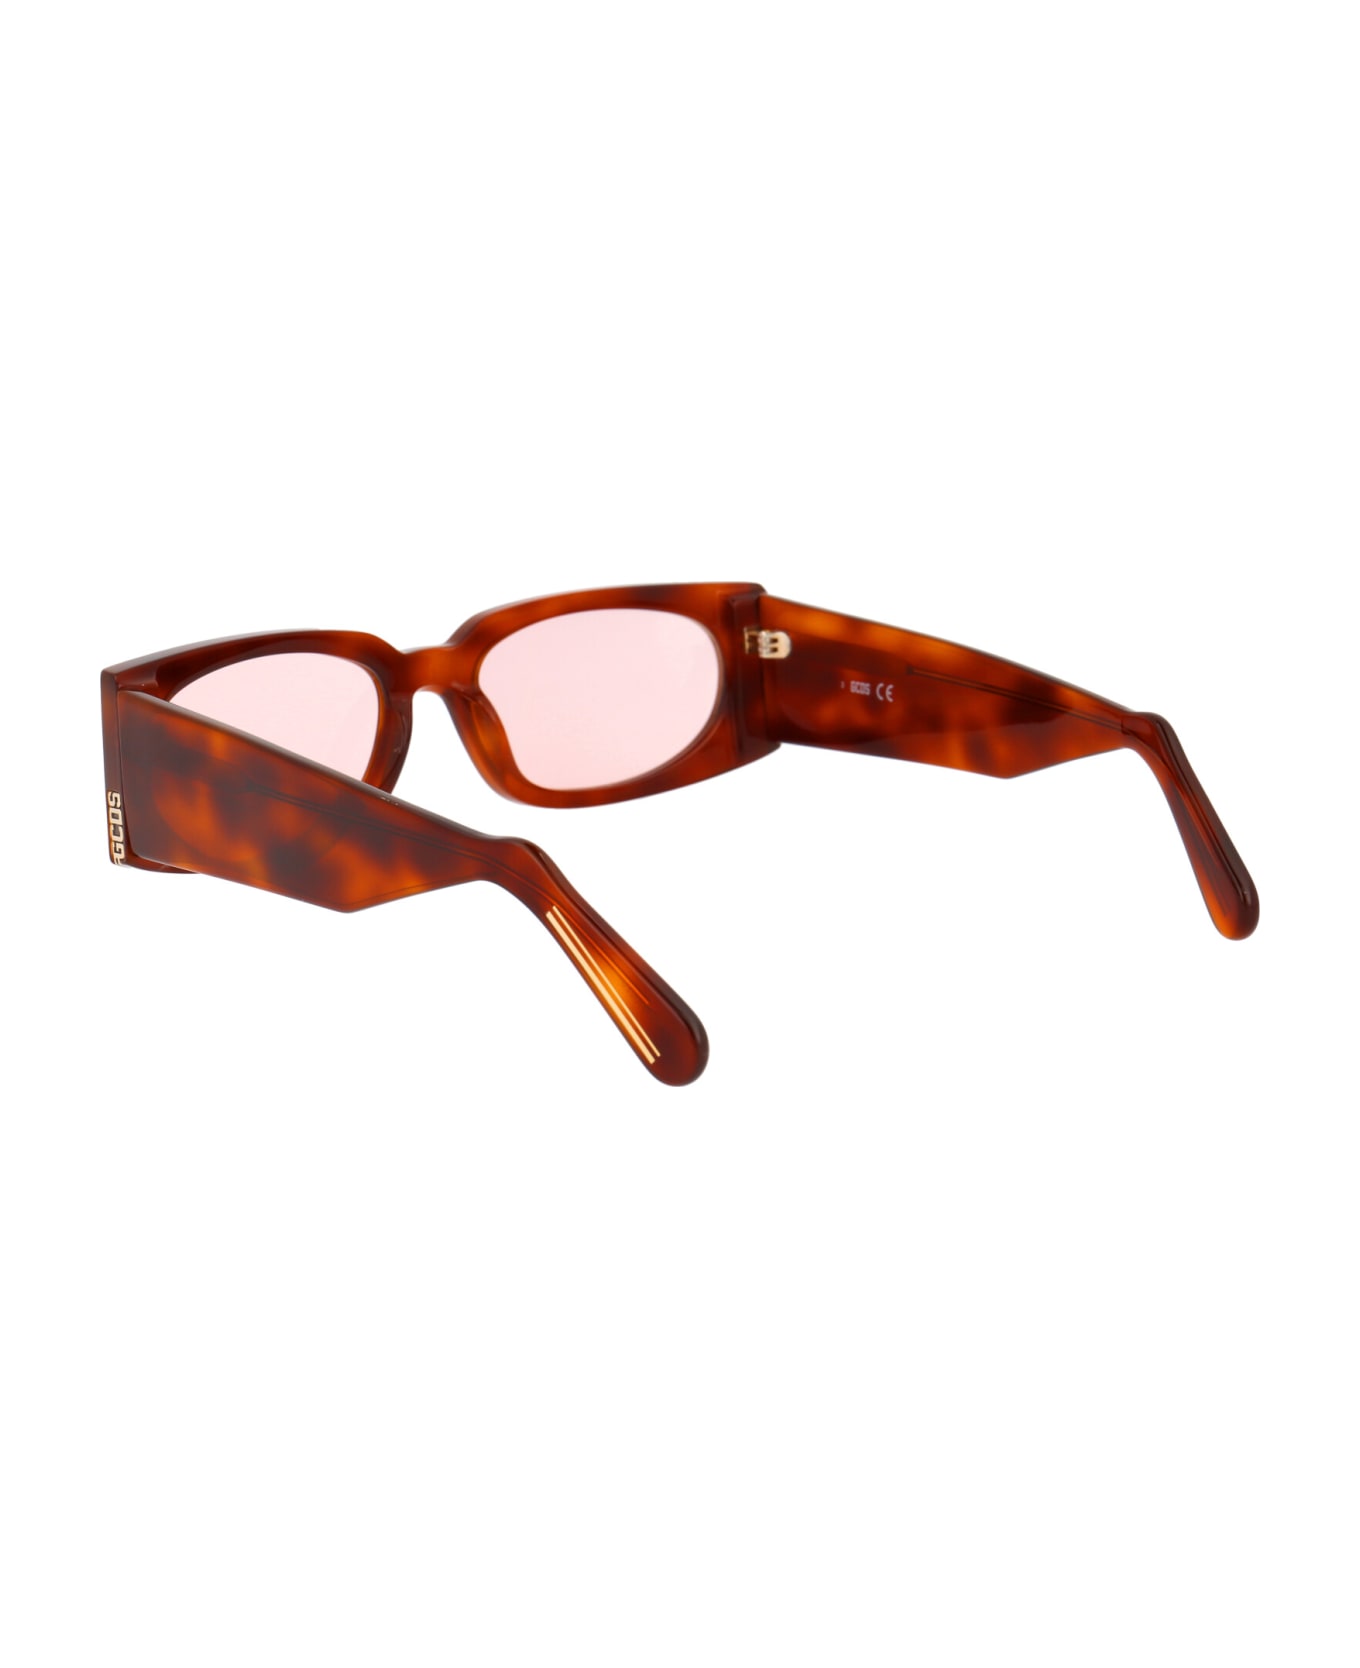 GCDS Gd0016 Sunglasses - 53S BROWN